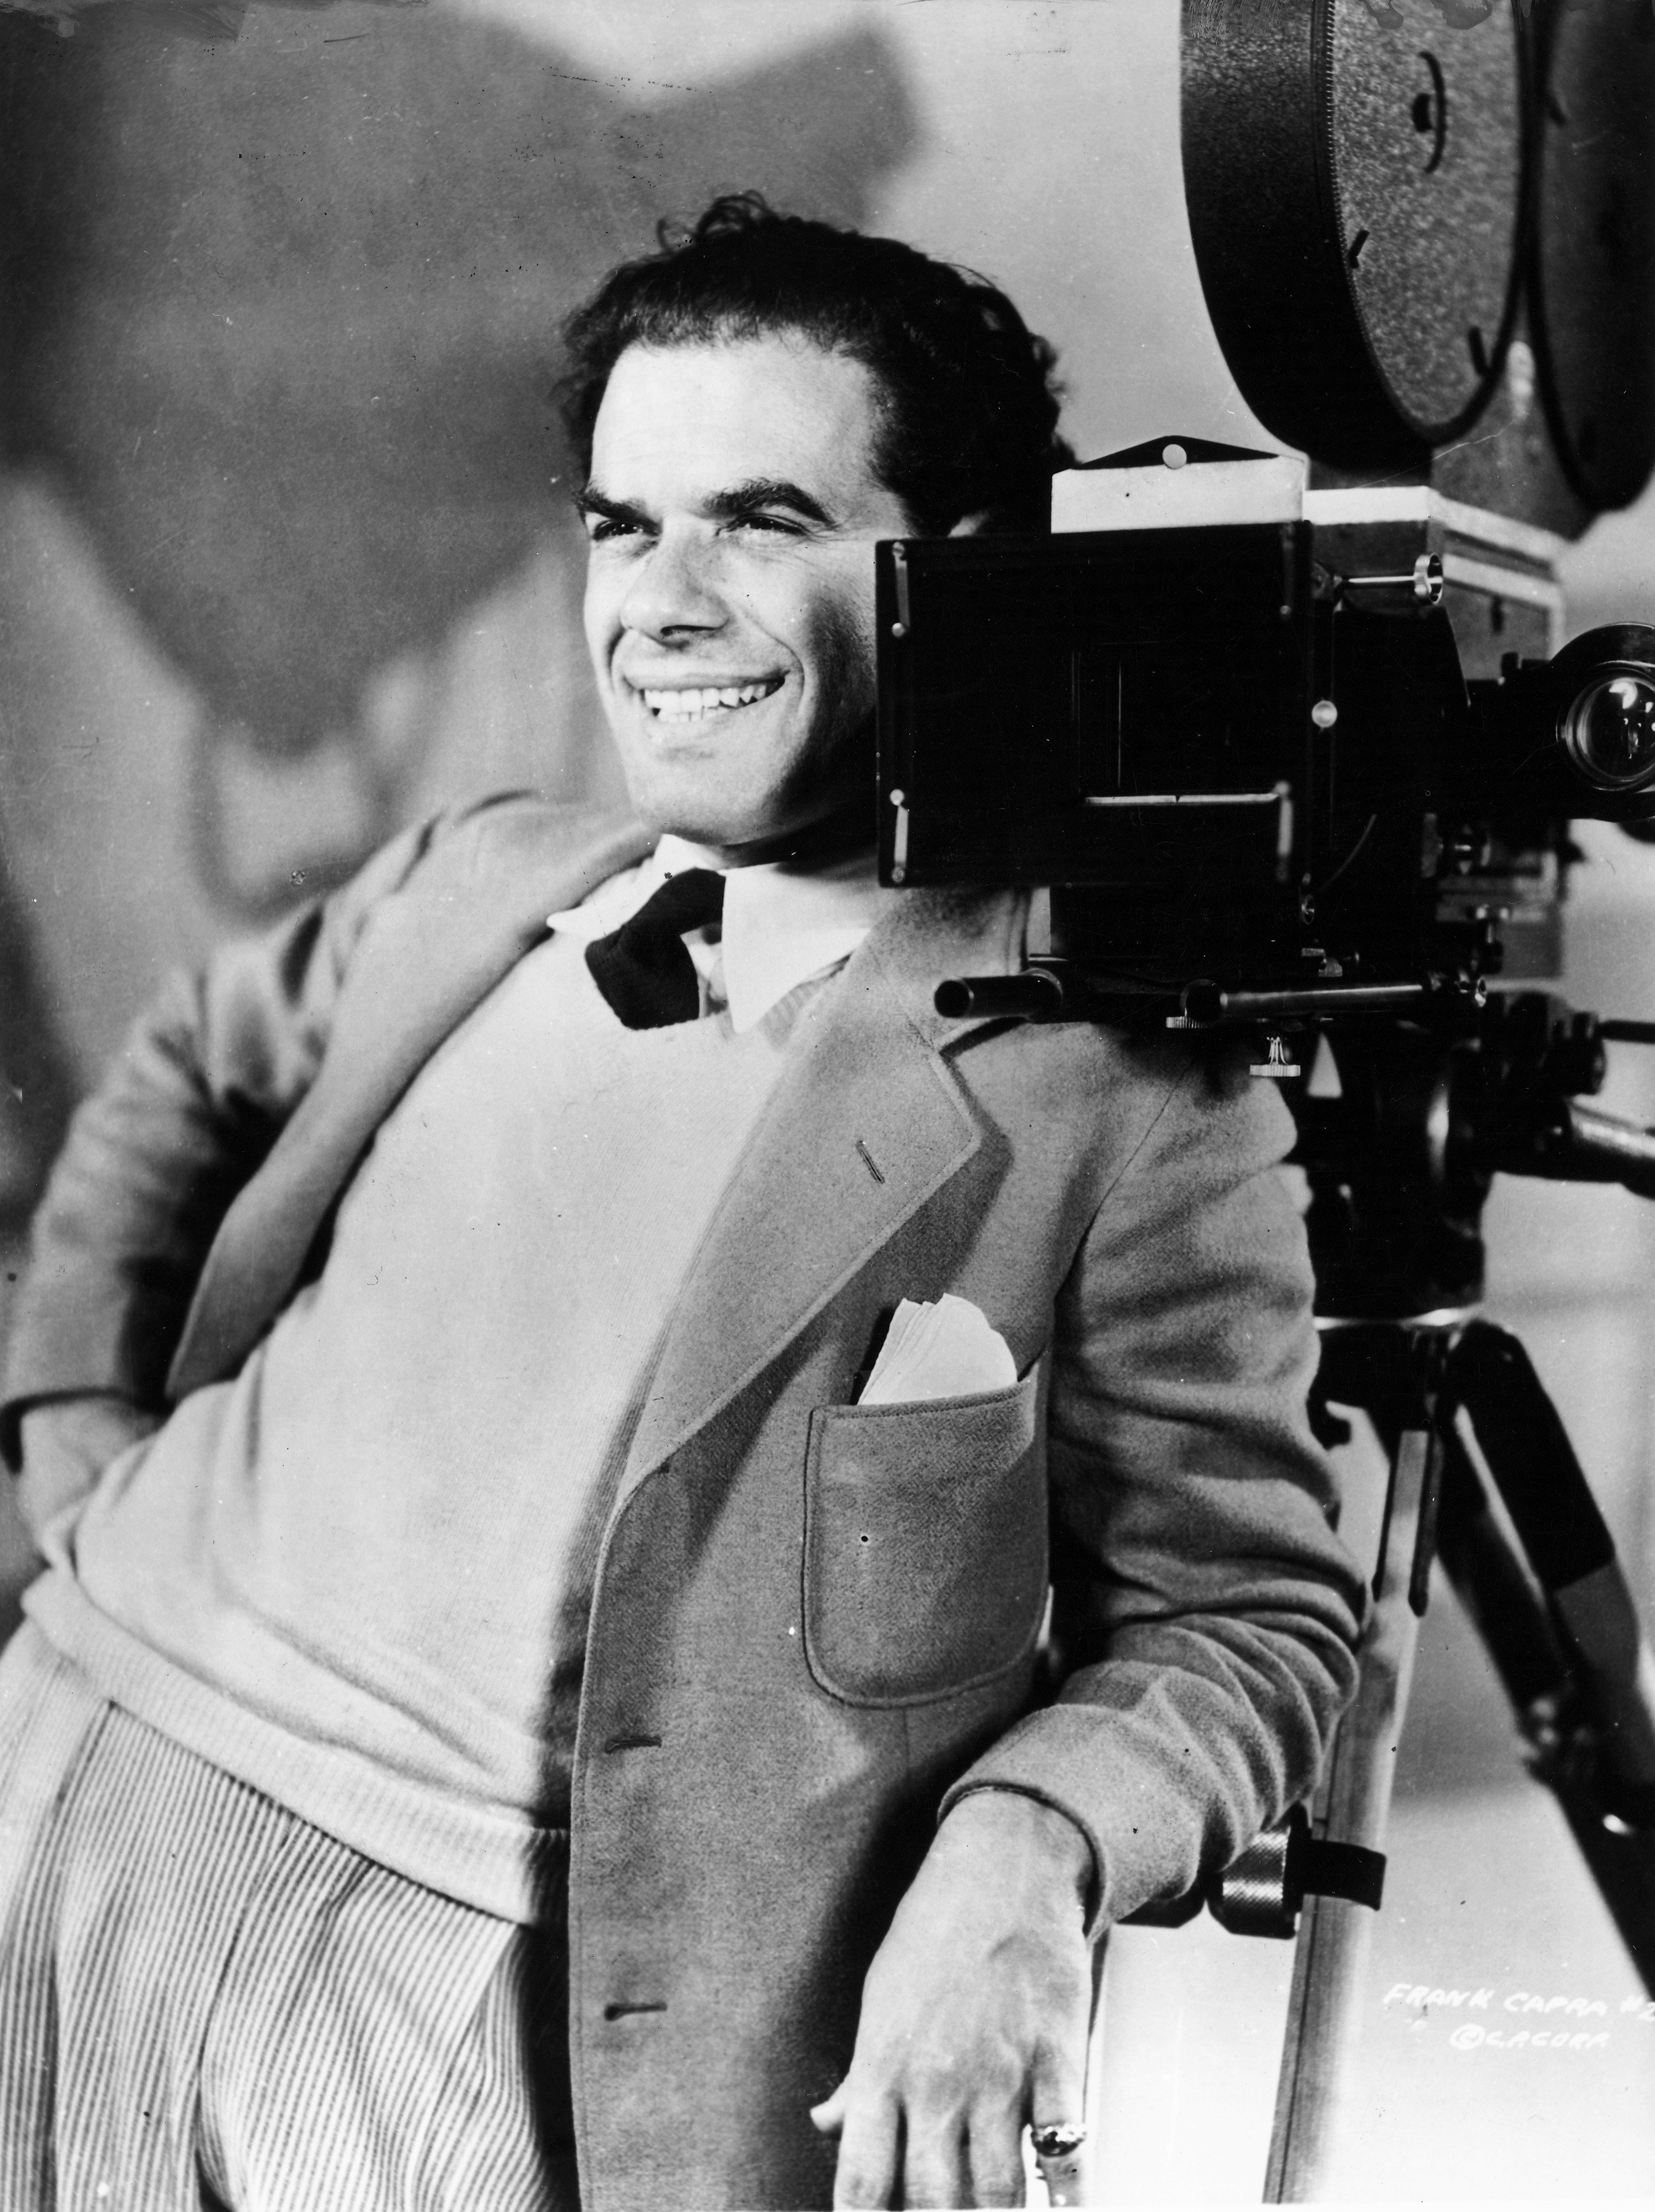 Director Frank Capra